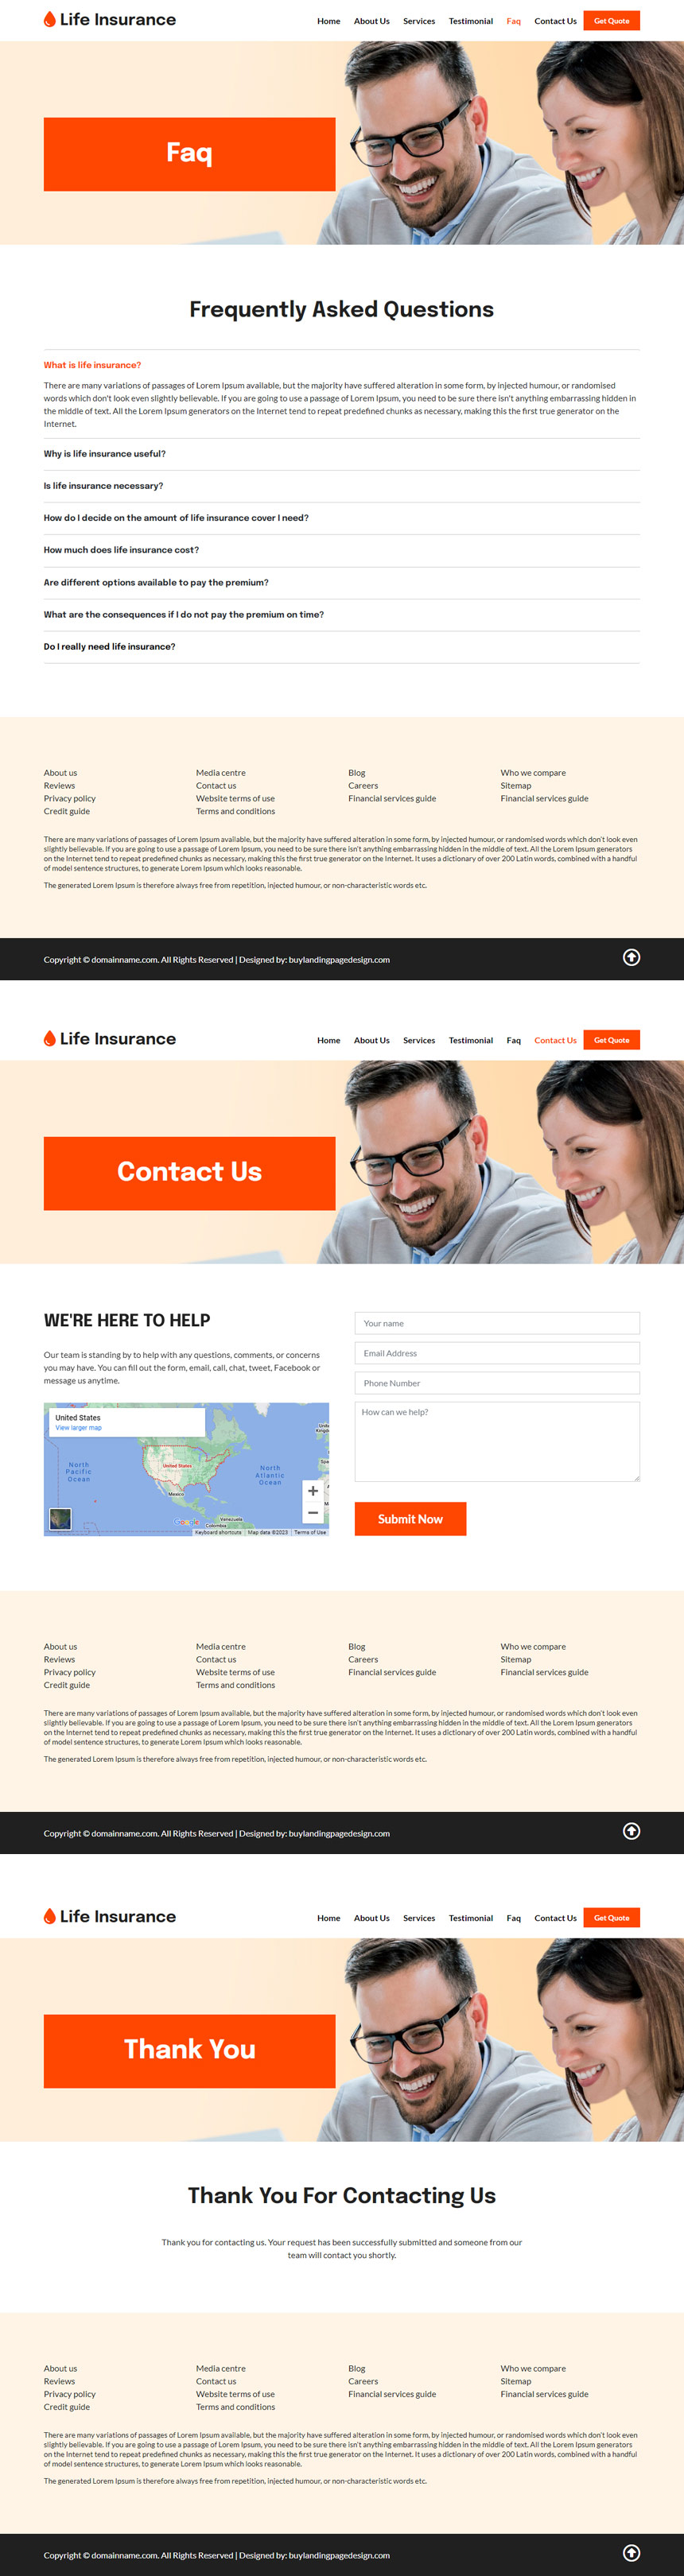 professional life insurance responsive website template